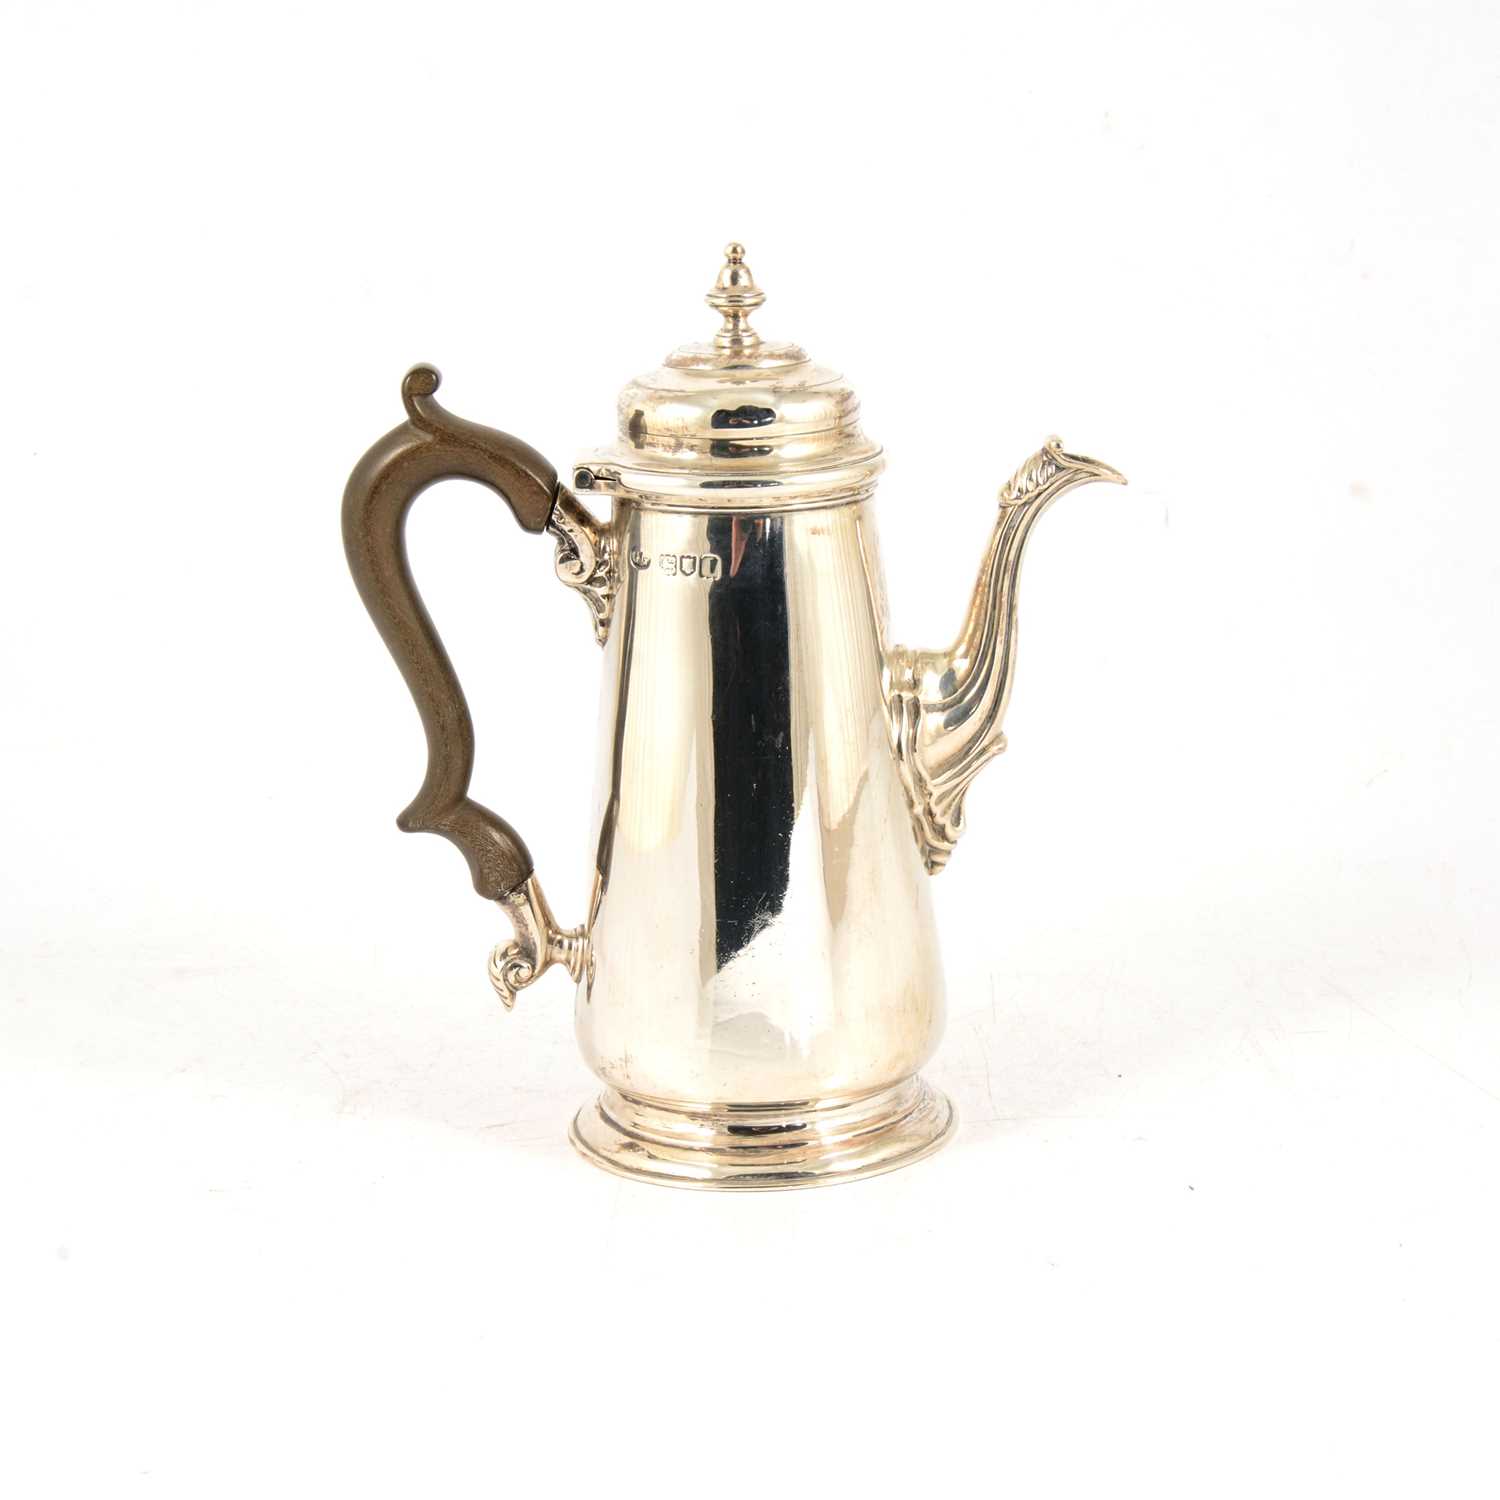 Lot 34 - Small Edwardian silver coffee pot, George Gilliam, London 1904